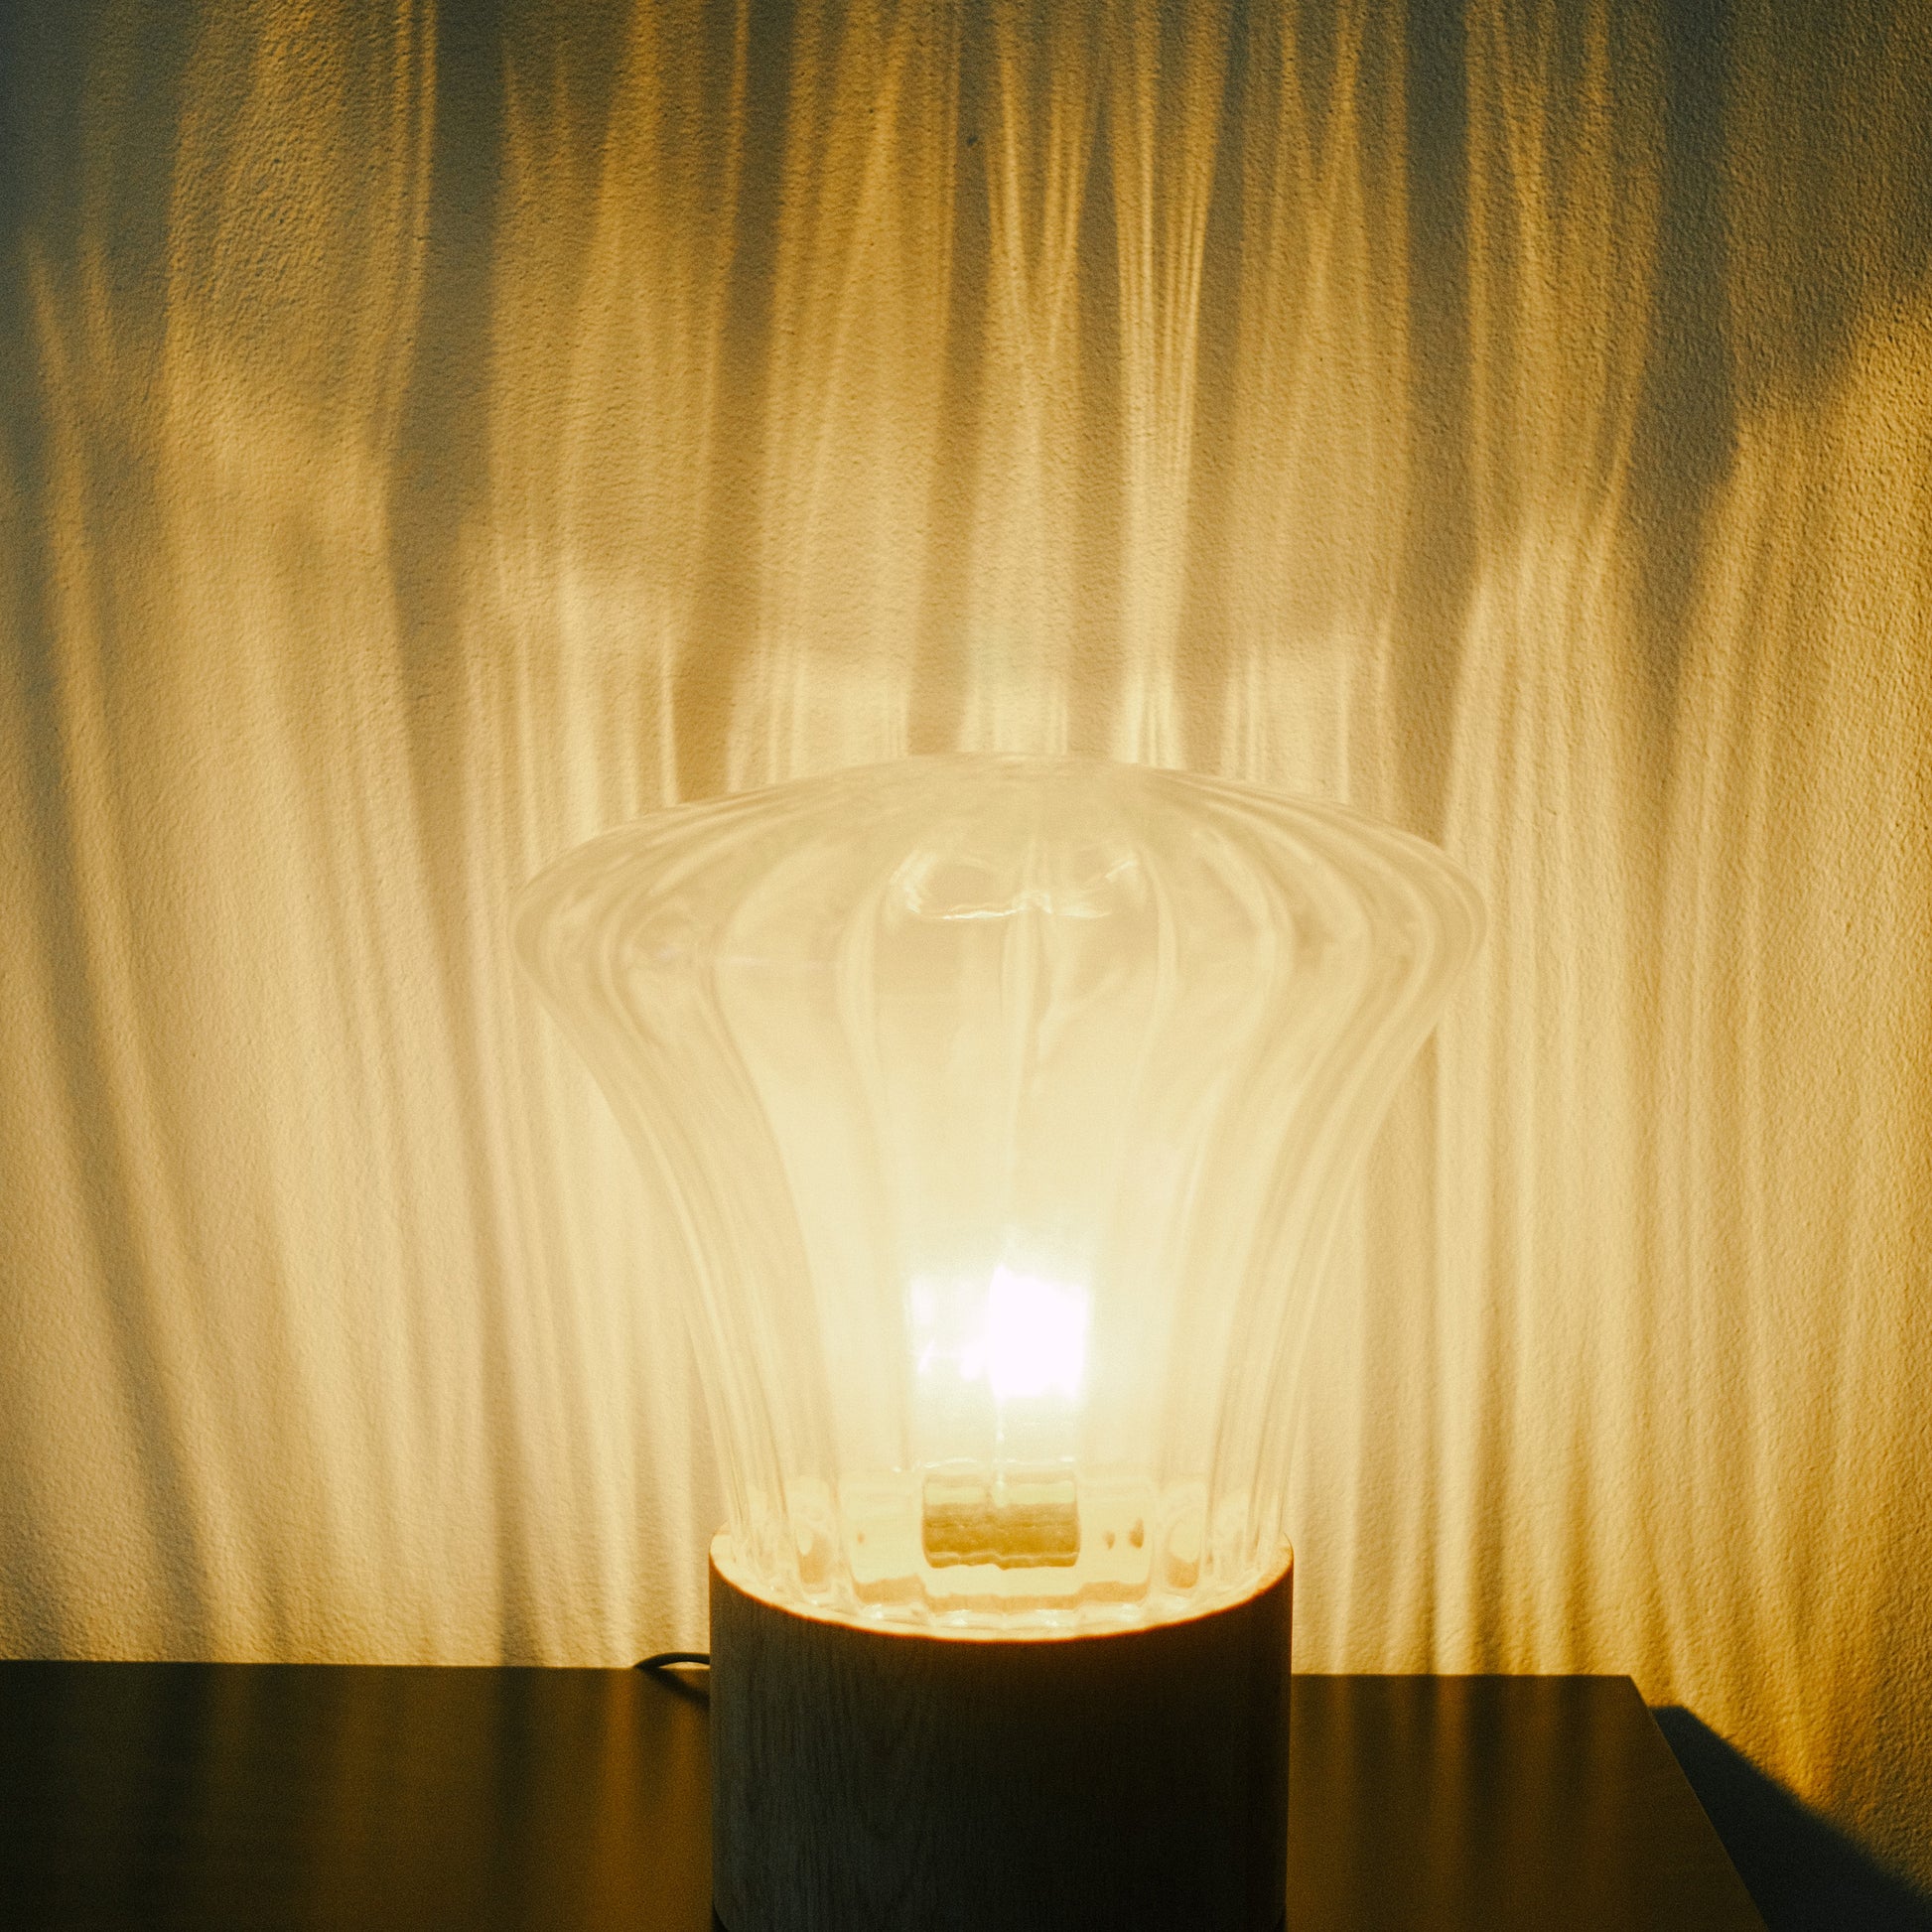 Lampi din sticlă - creaza o atomosfera de poveste in casa ta